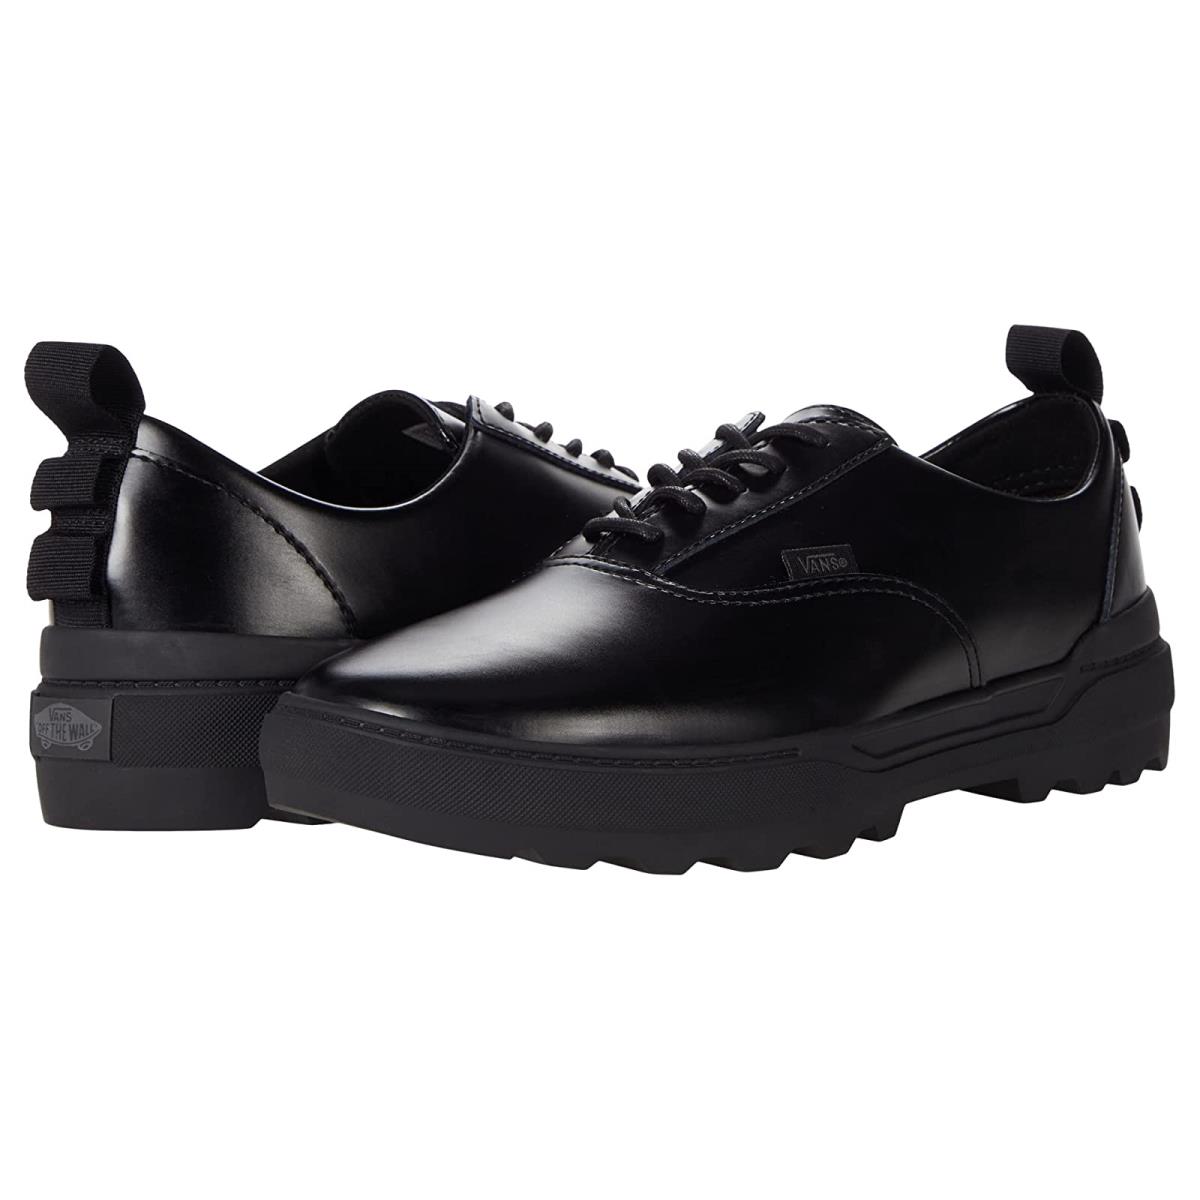 Unisex Sneakers Athletic Shoes Vans Colfax Low (Leather) Black/Black